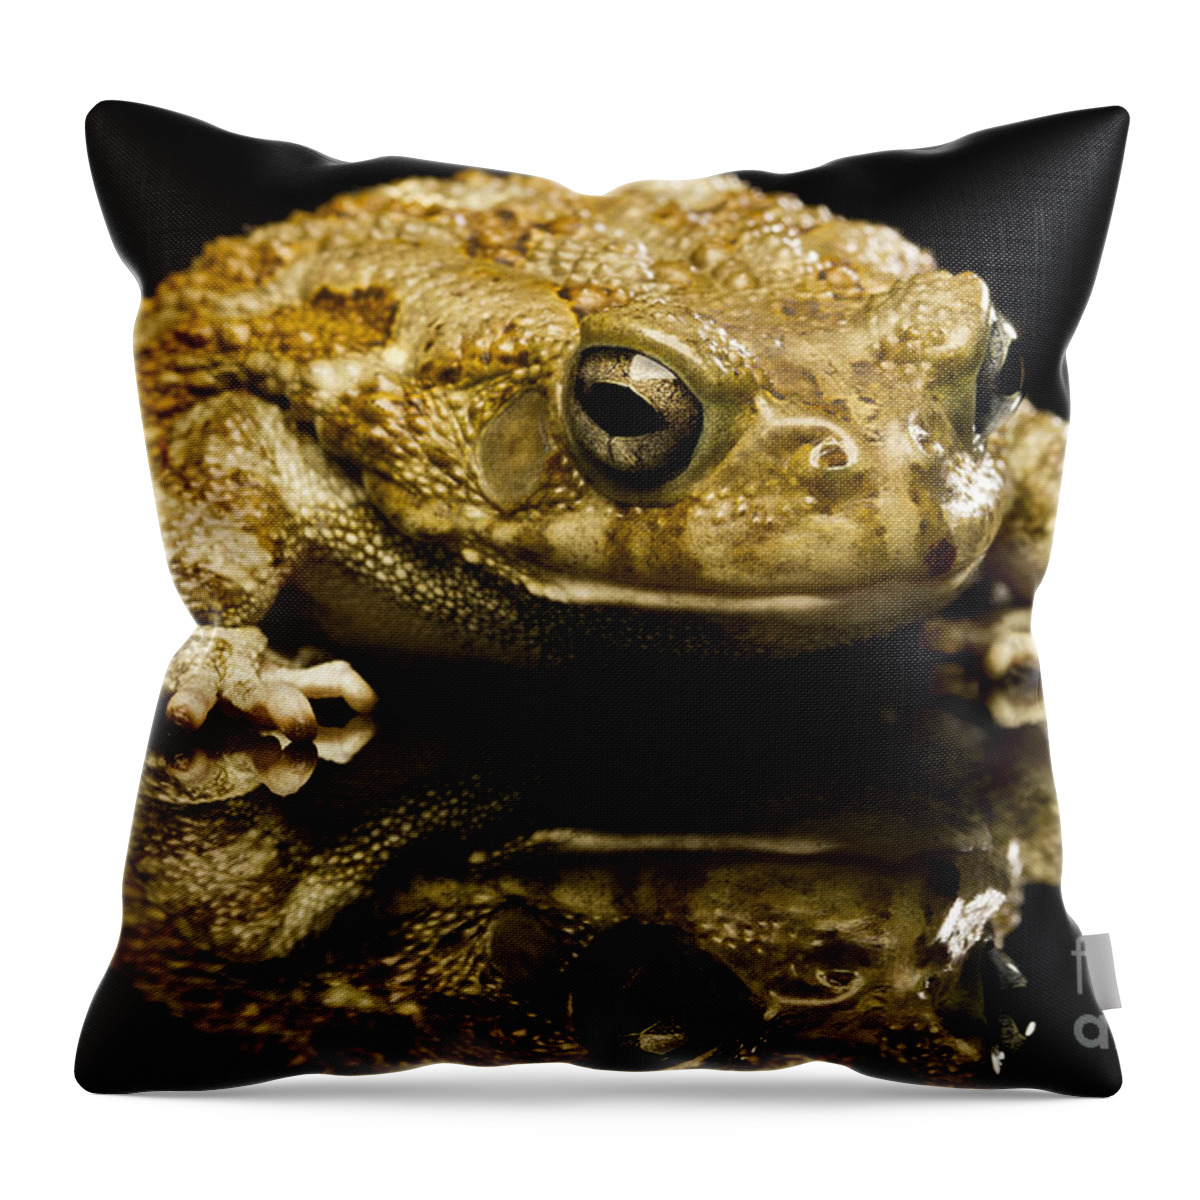 Frog Throw Pillow featuring the photograph Frog by Gunnar Orn Arnason